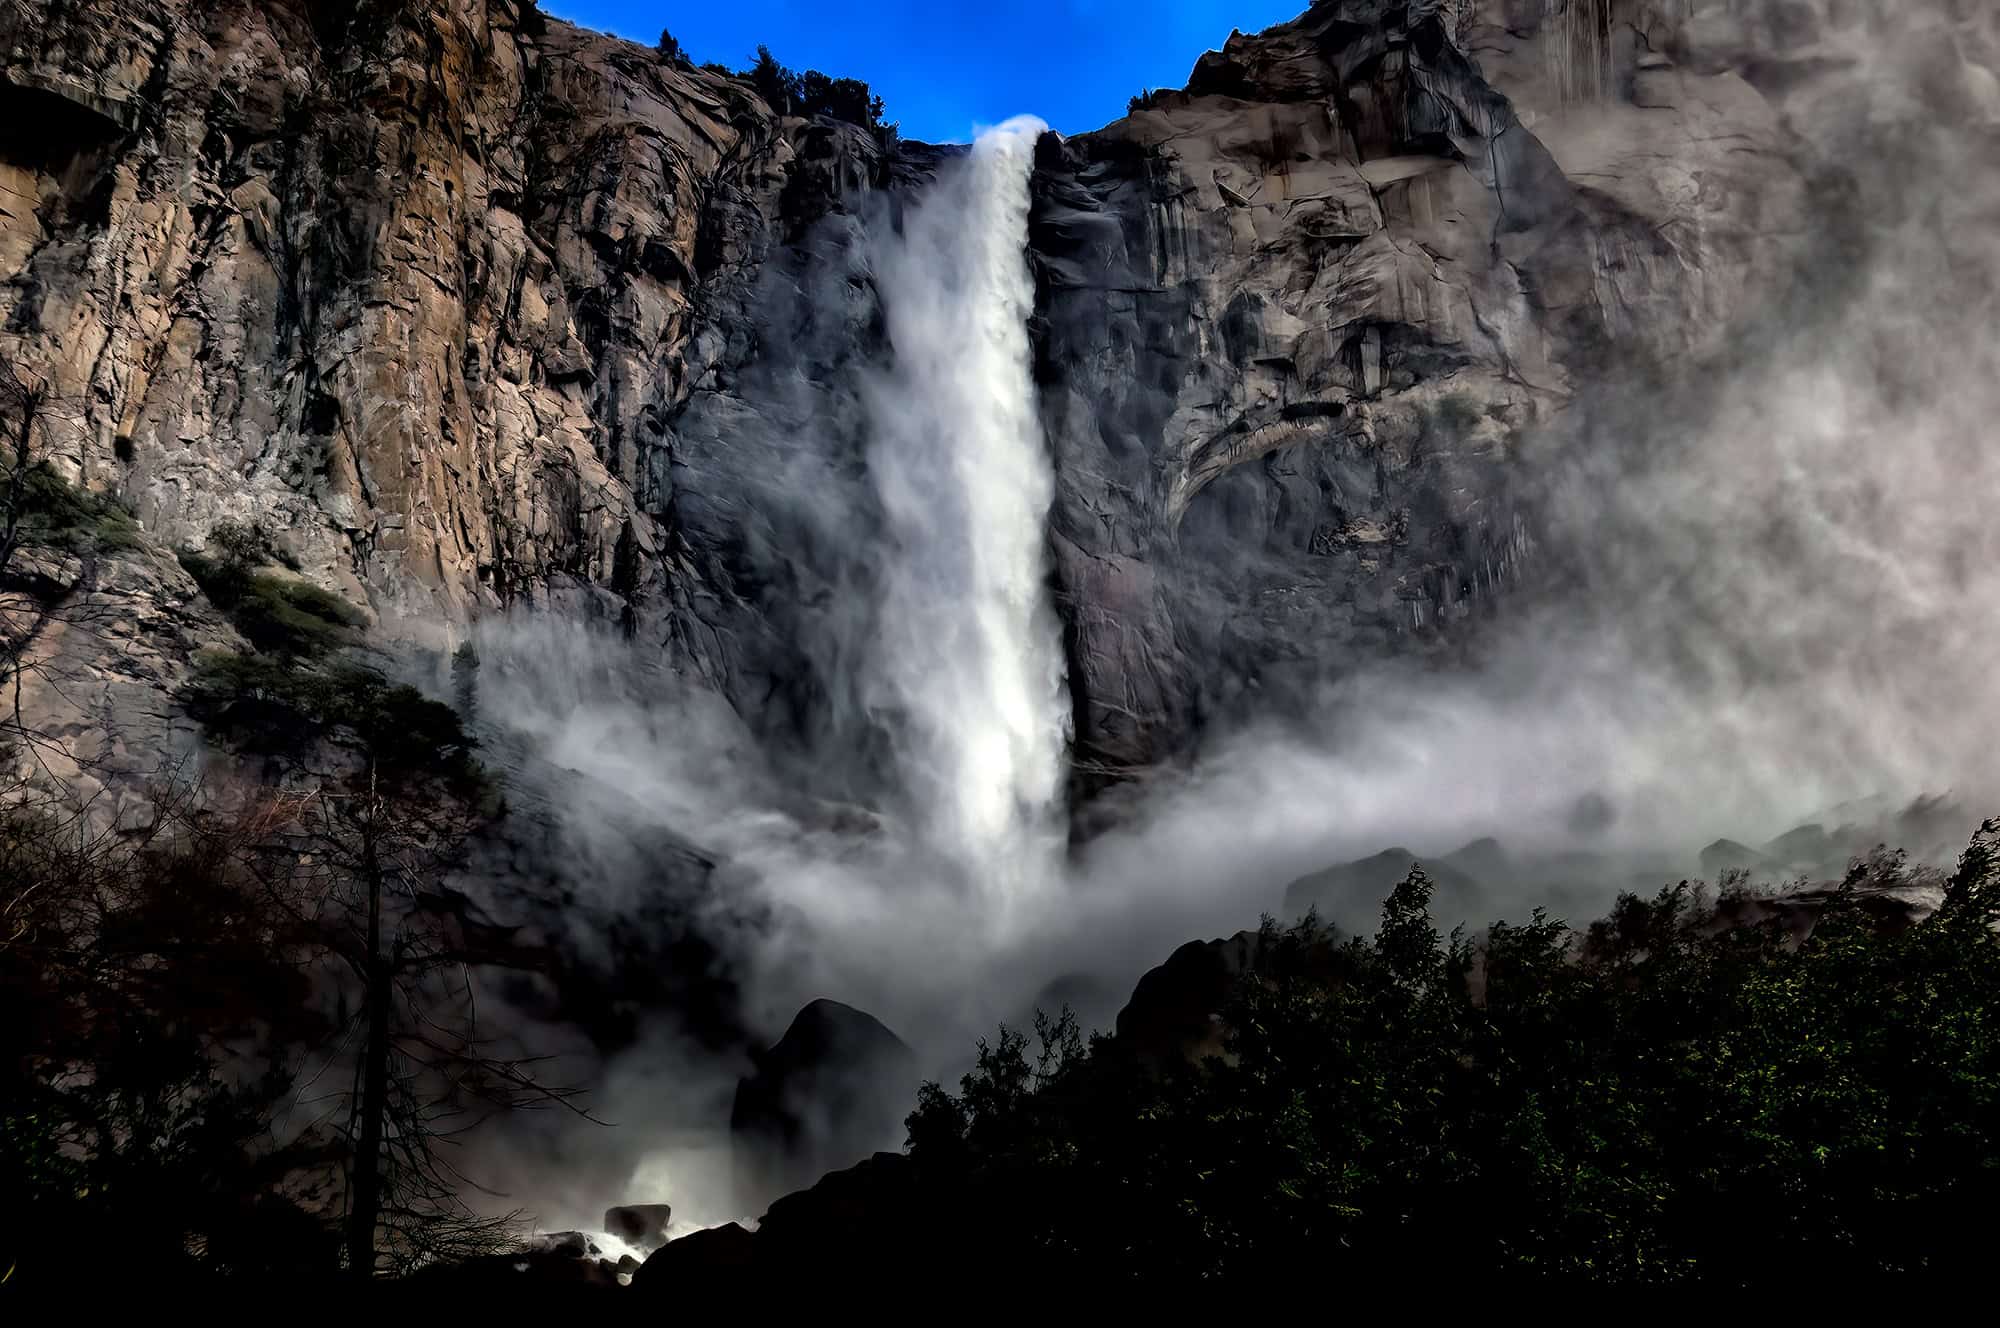 Thunderous water of Bridalveil Fall in Yosemite National Park